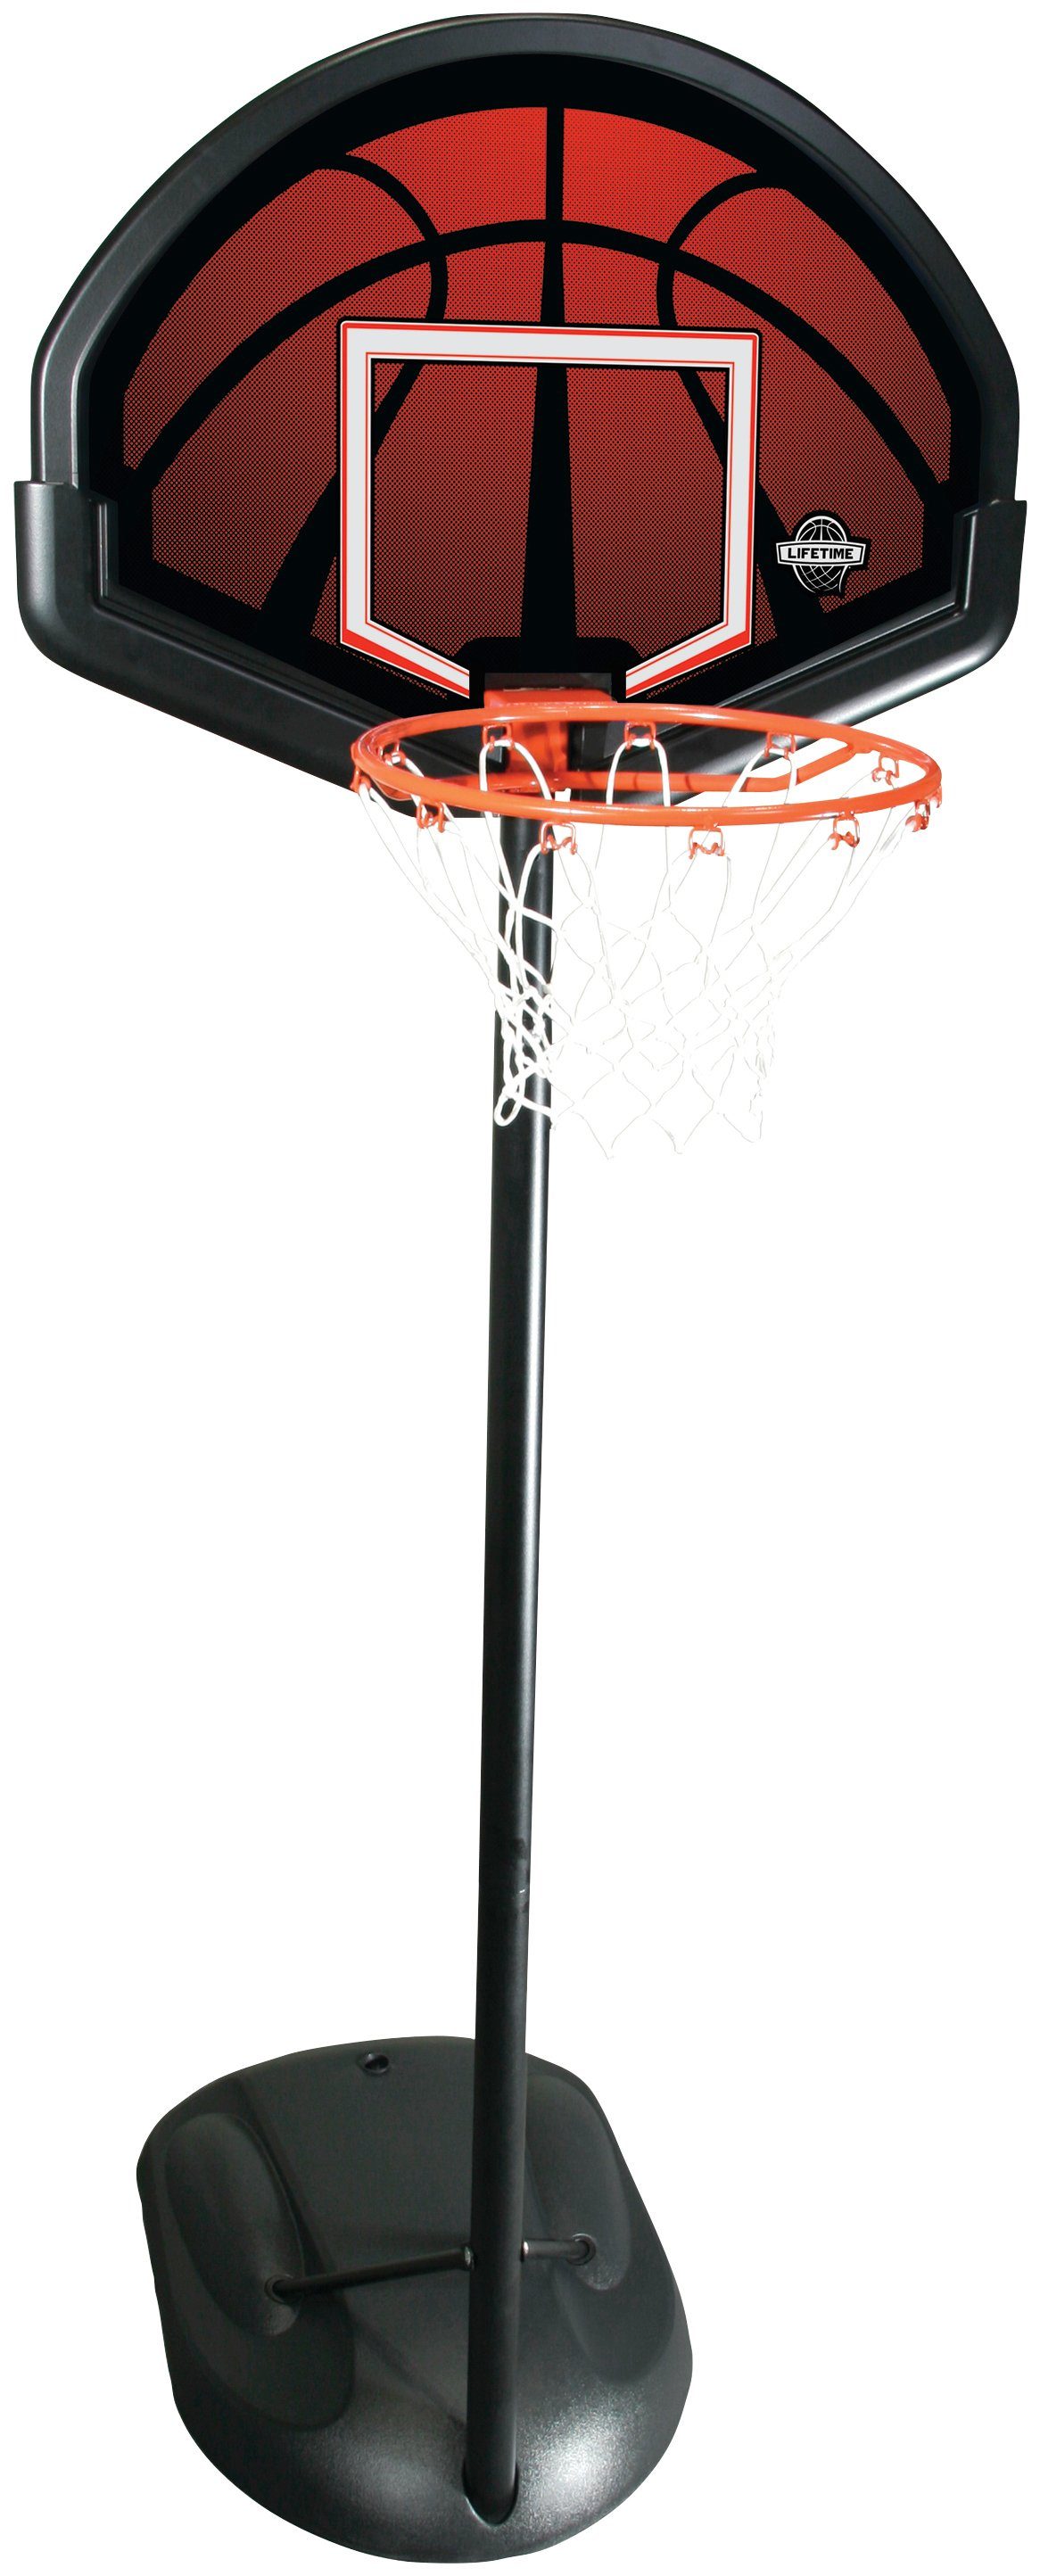 Basketballkorb höhenverstellbar Alabama, schwarz/rot 50NRTH